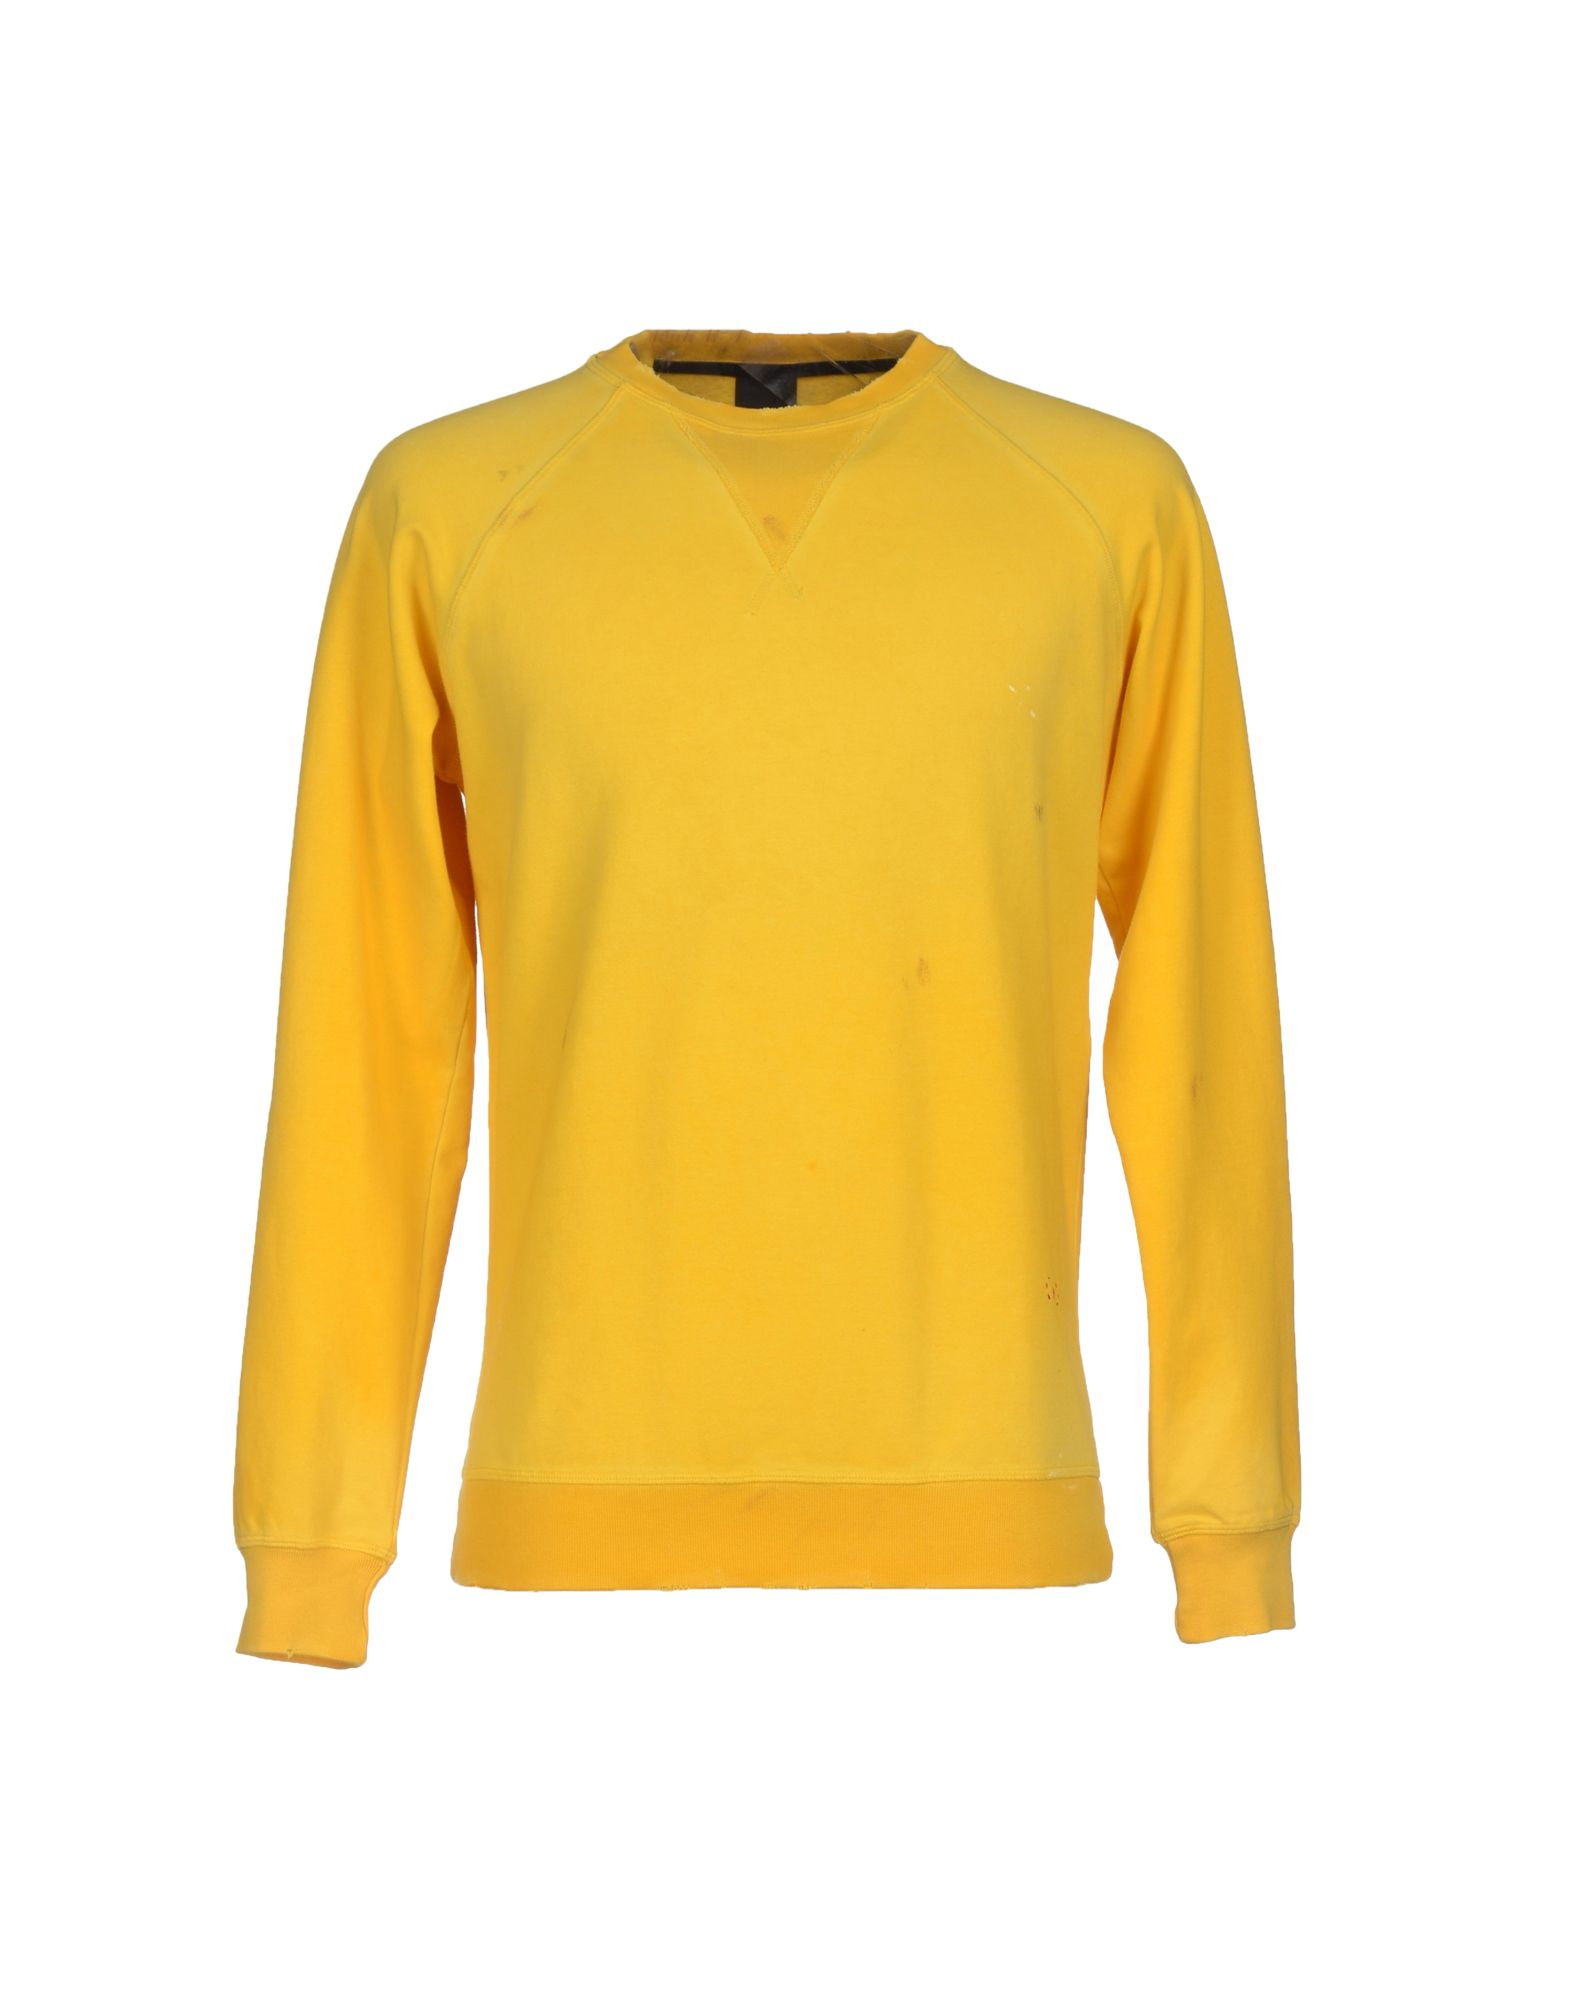 Lyst - People Sweatshirt in Yellow for Men